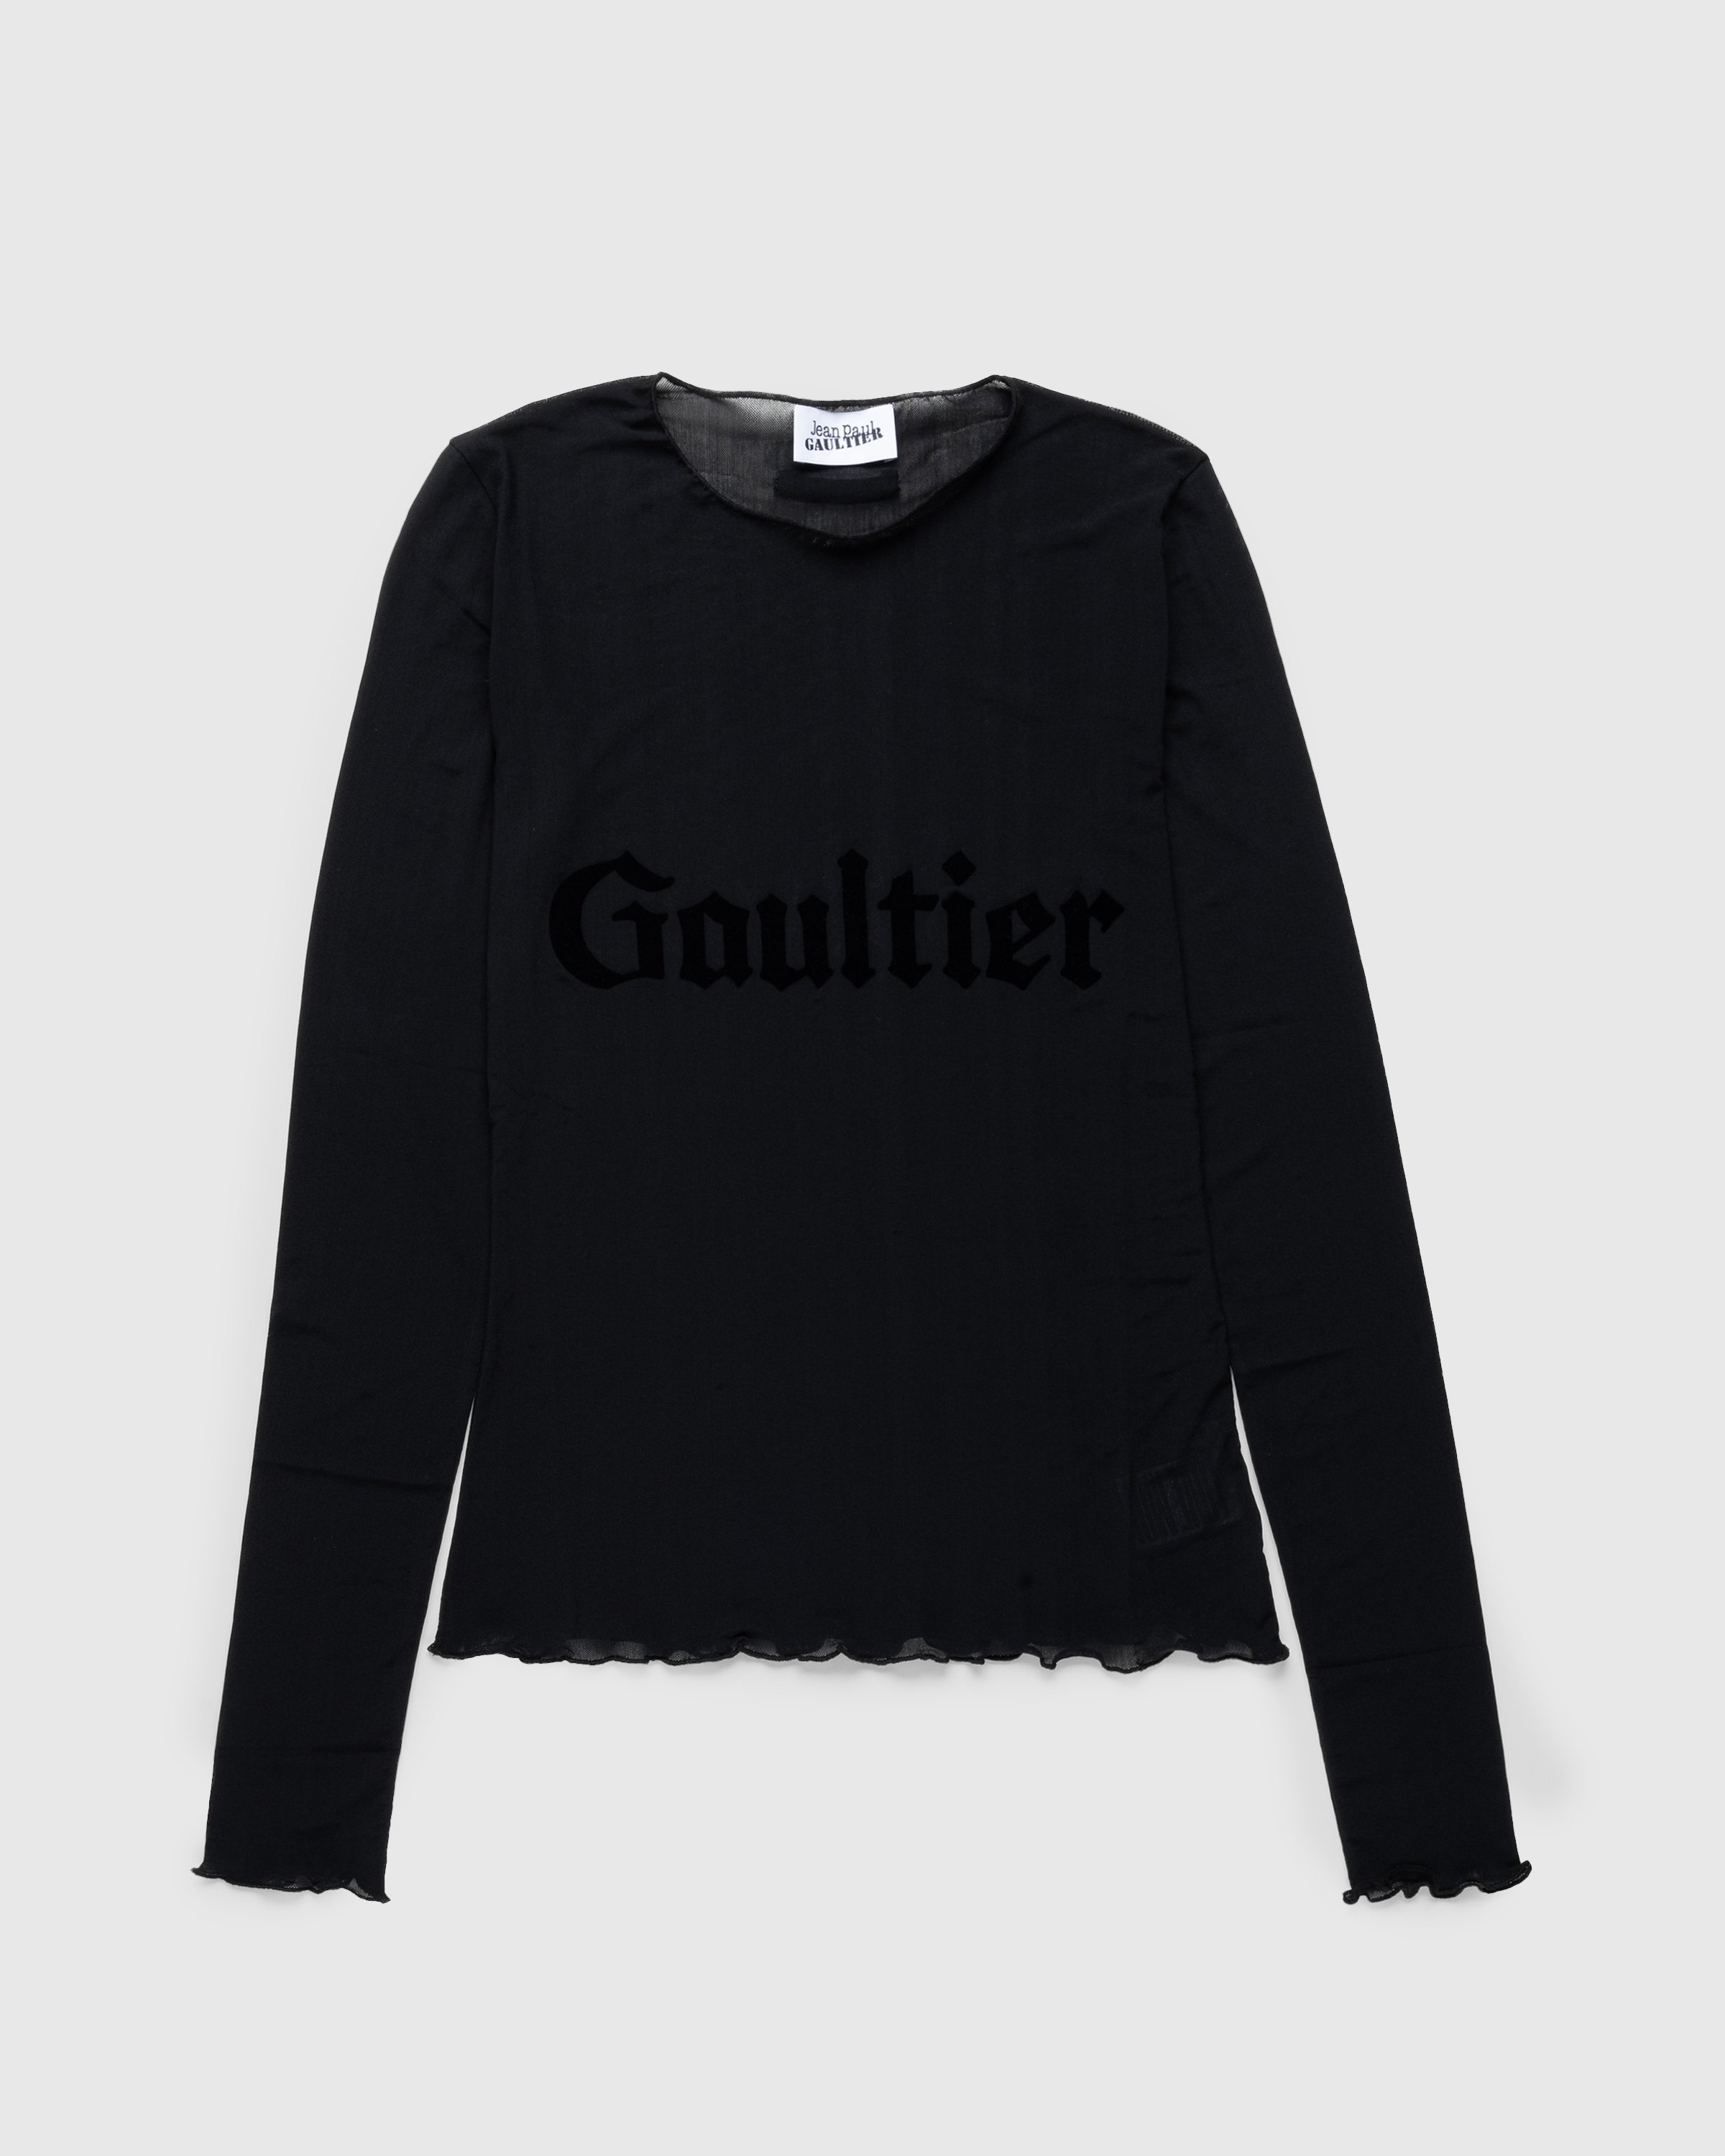 Jean Paul Gaultier - Velvet Gaultier Long-Sleeve Black - Clothing - Black - Image 1